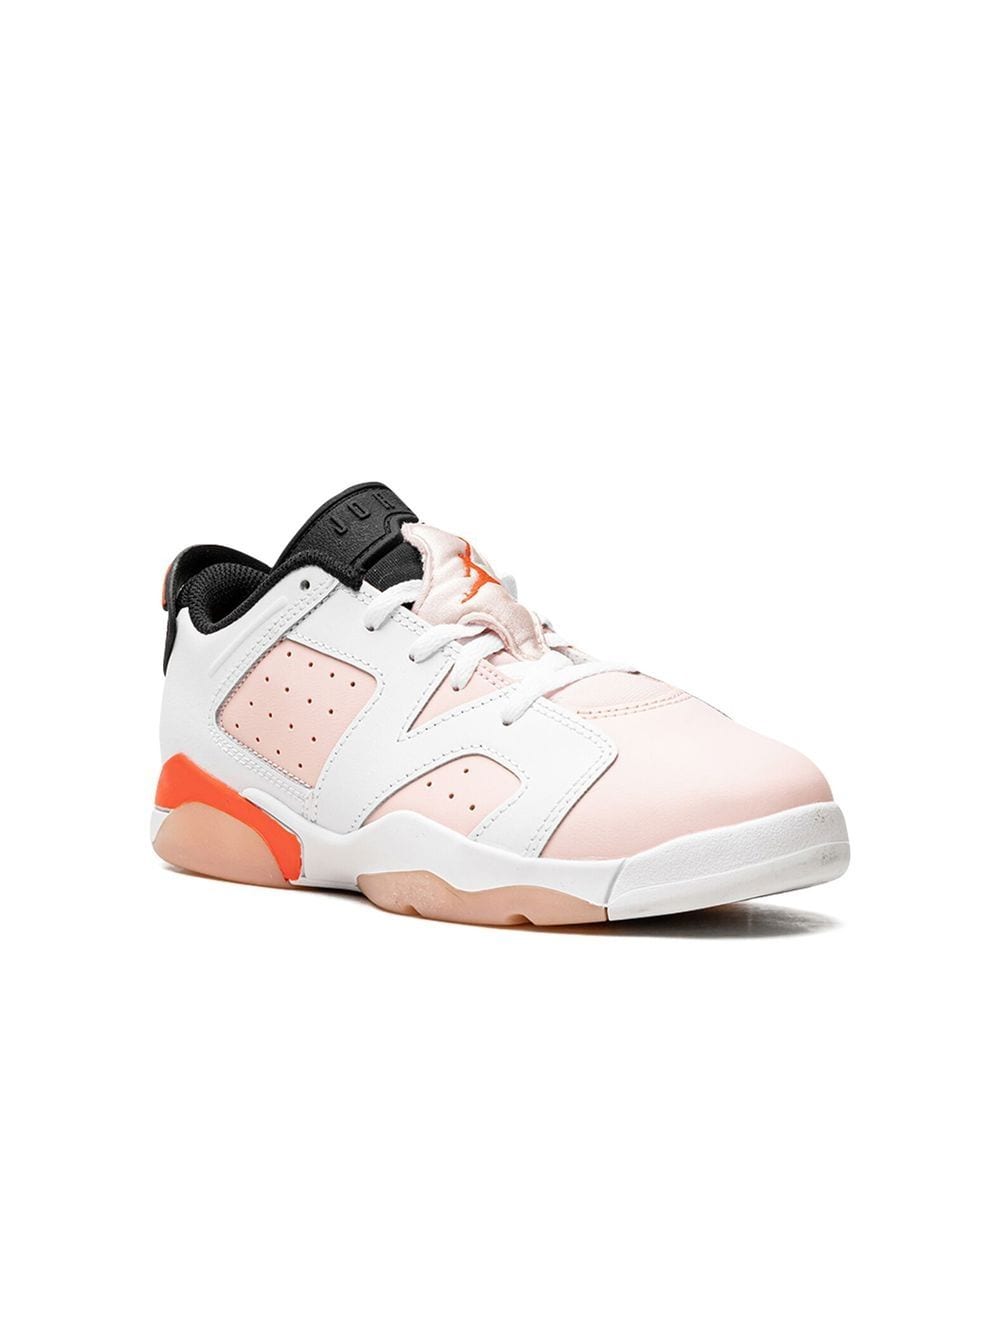 Jordan Kids Jordan 6 Retro Low "White/Atmosphere/Infrared 23" sneakers - Pink von Jordan Kids